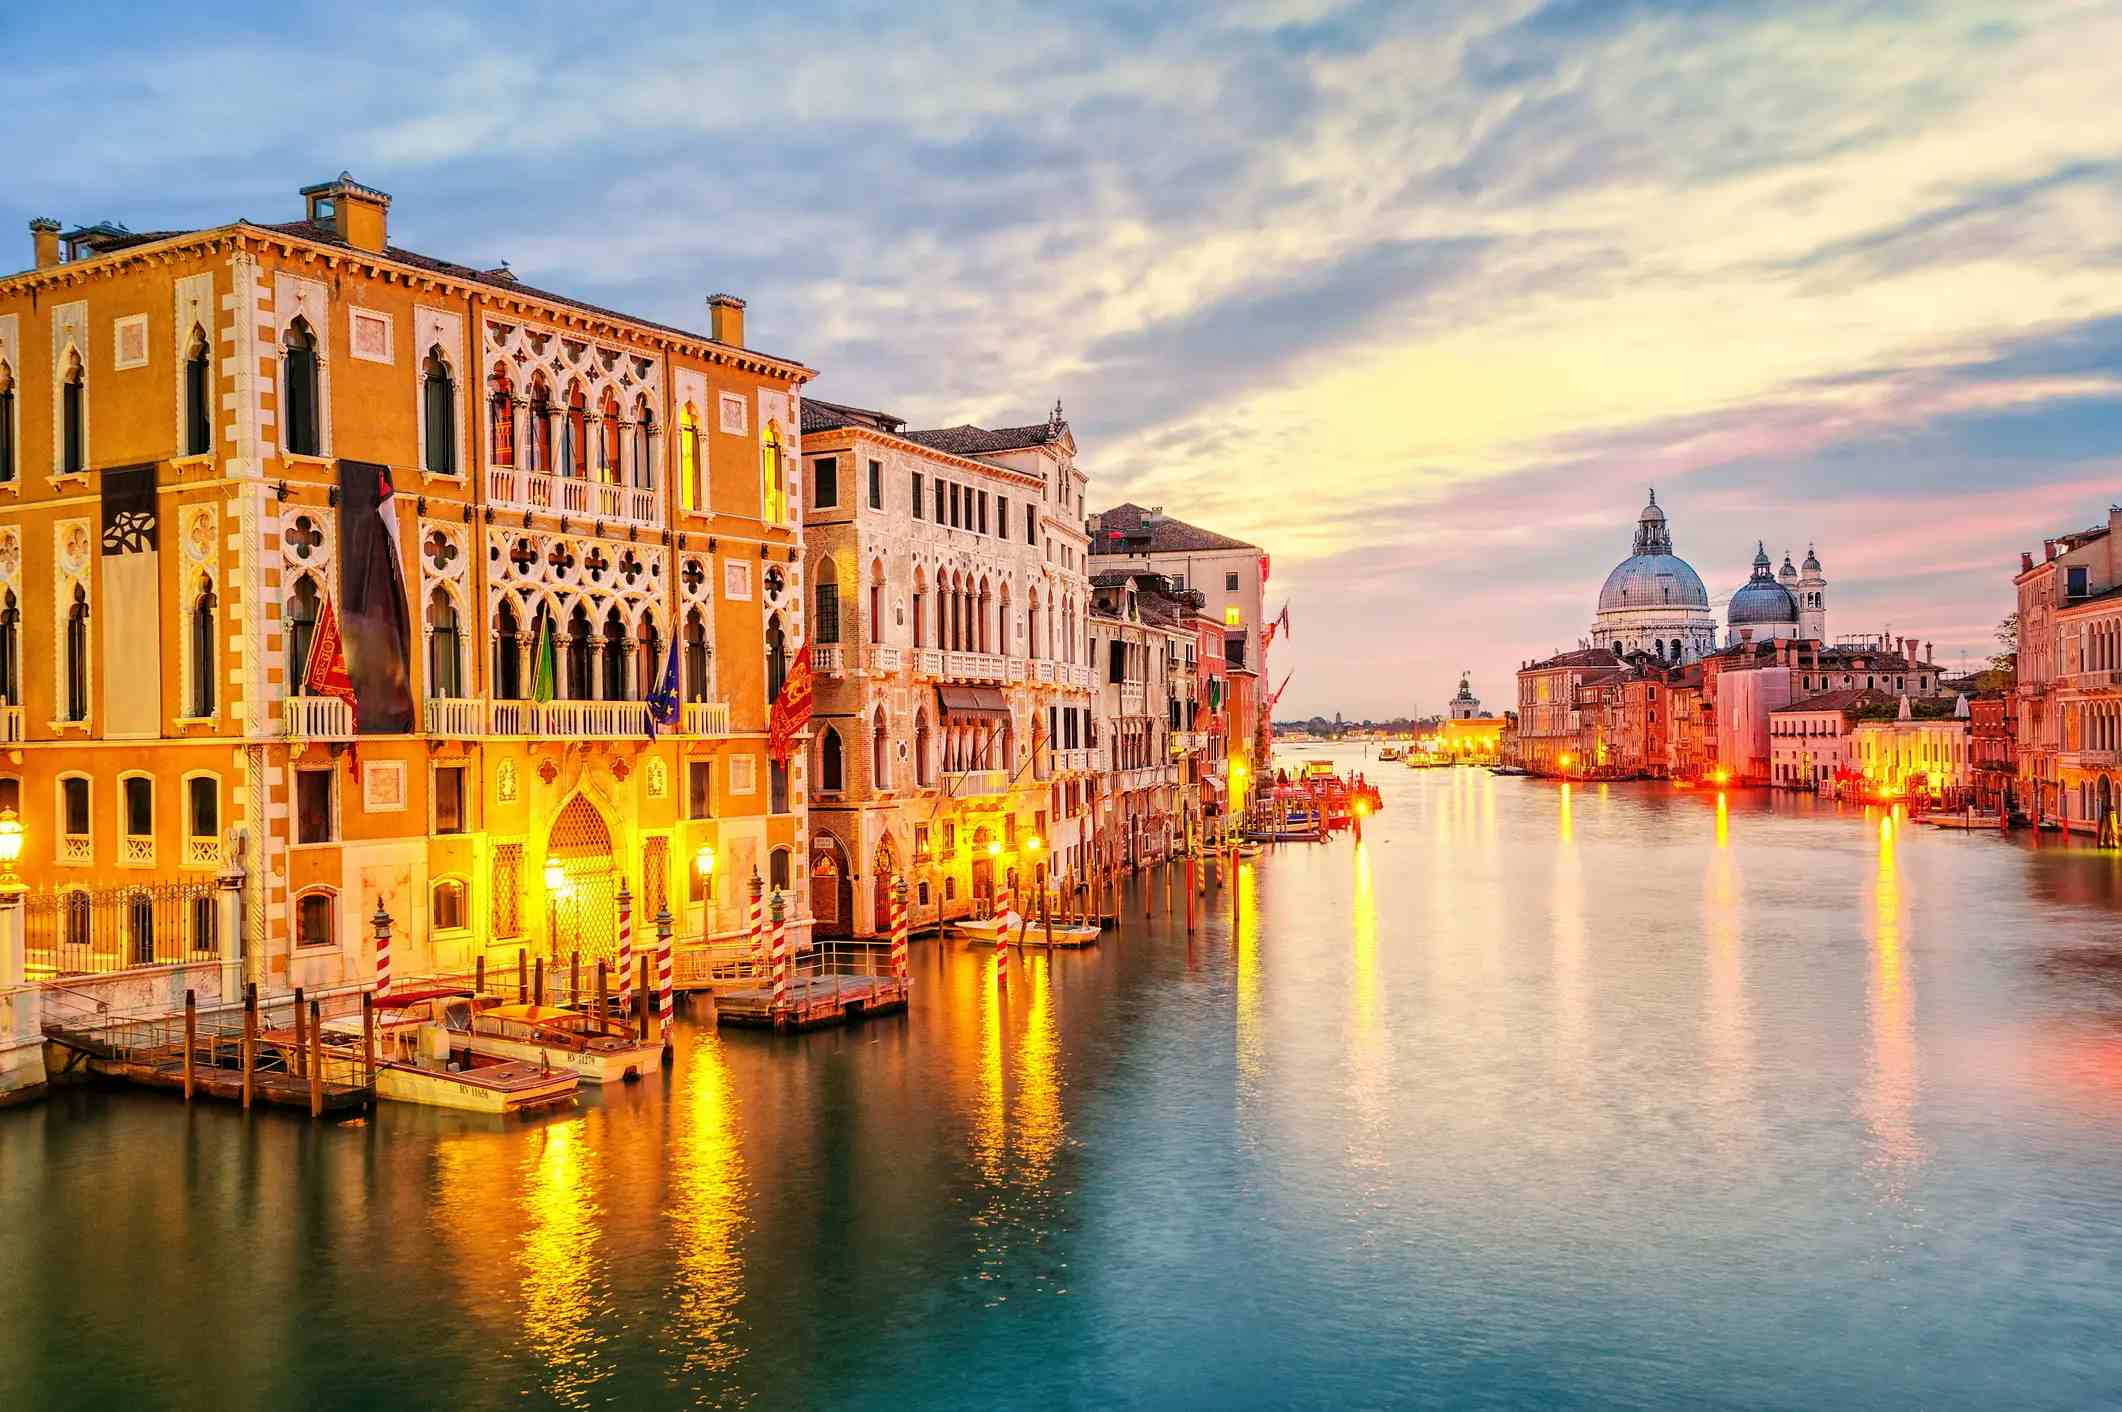 Gran Canal de Venecia image